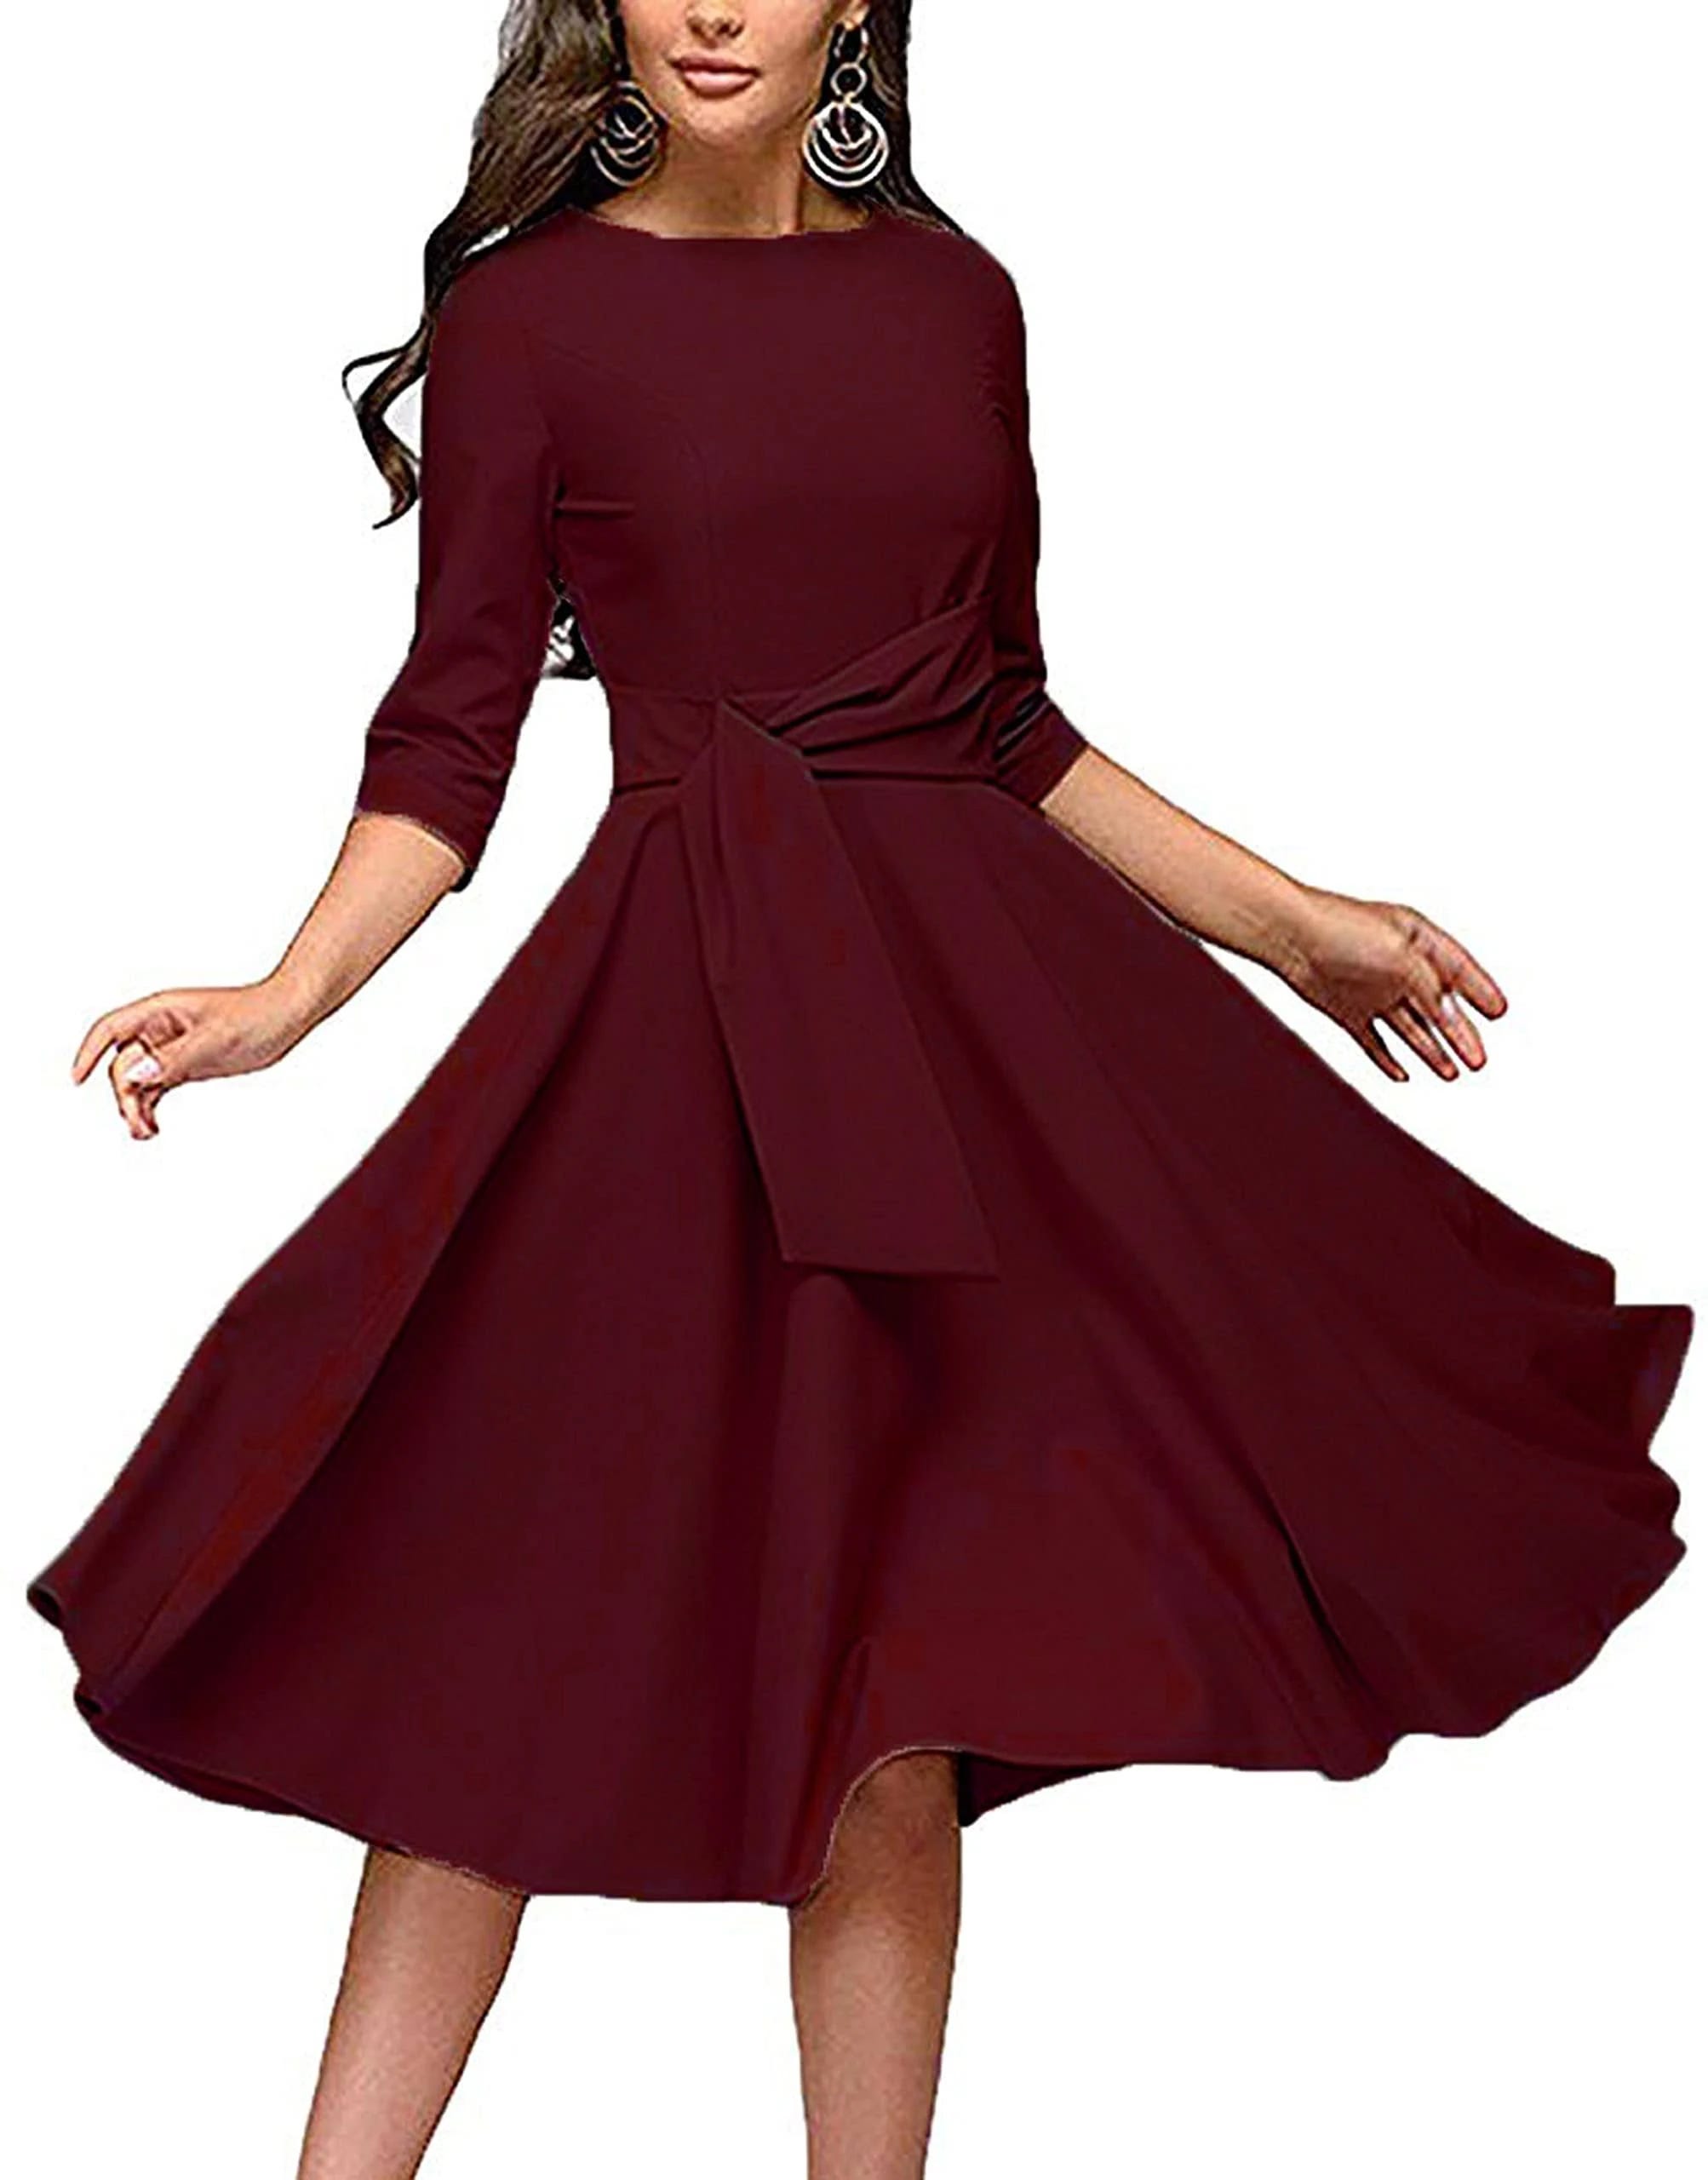 Feminine Audrey Hepburn Inspired Ruched Midi Dress for Women | Image